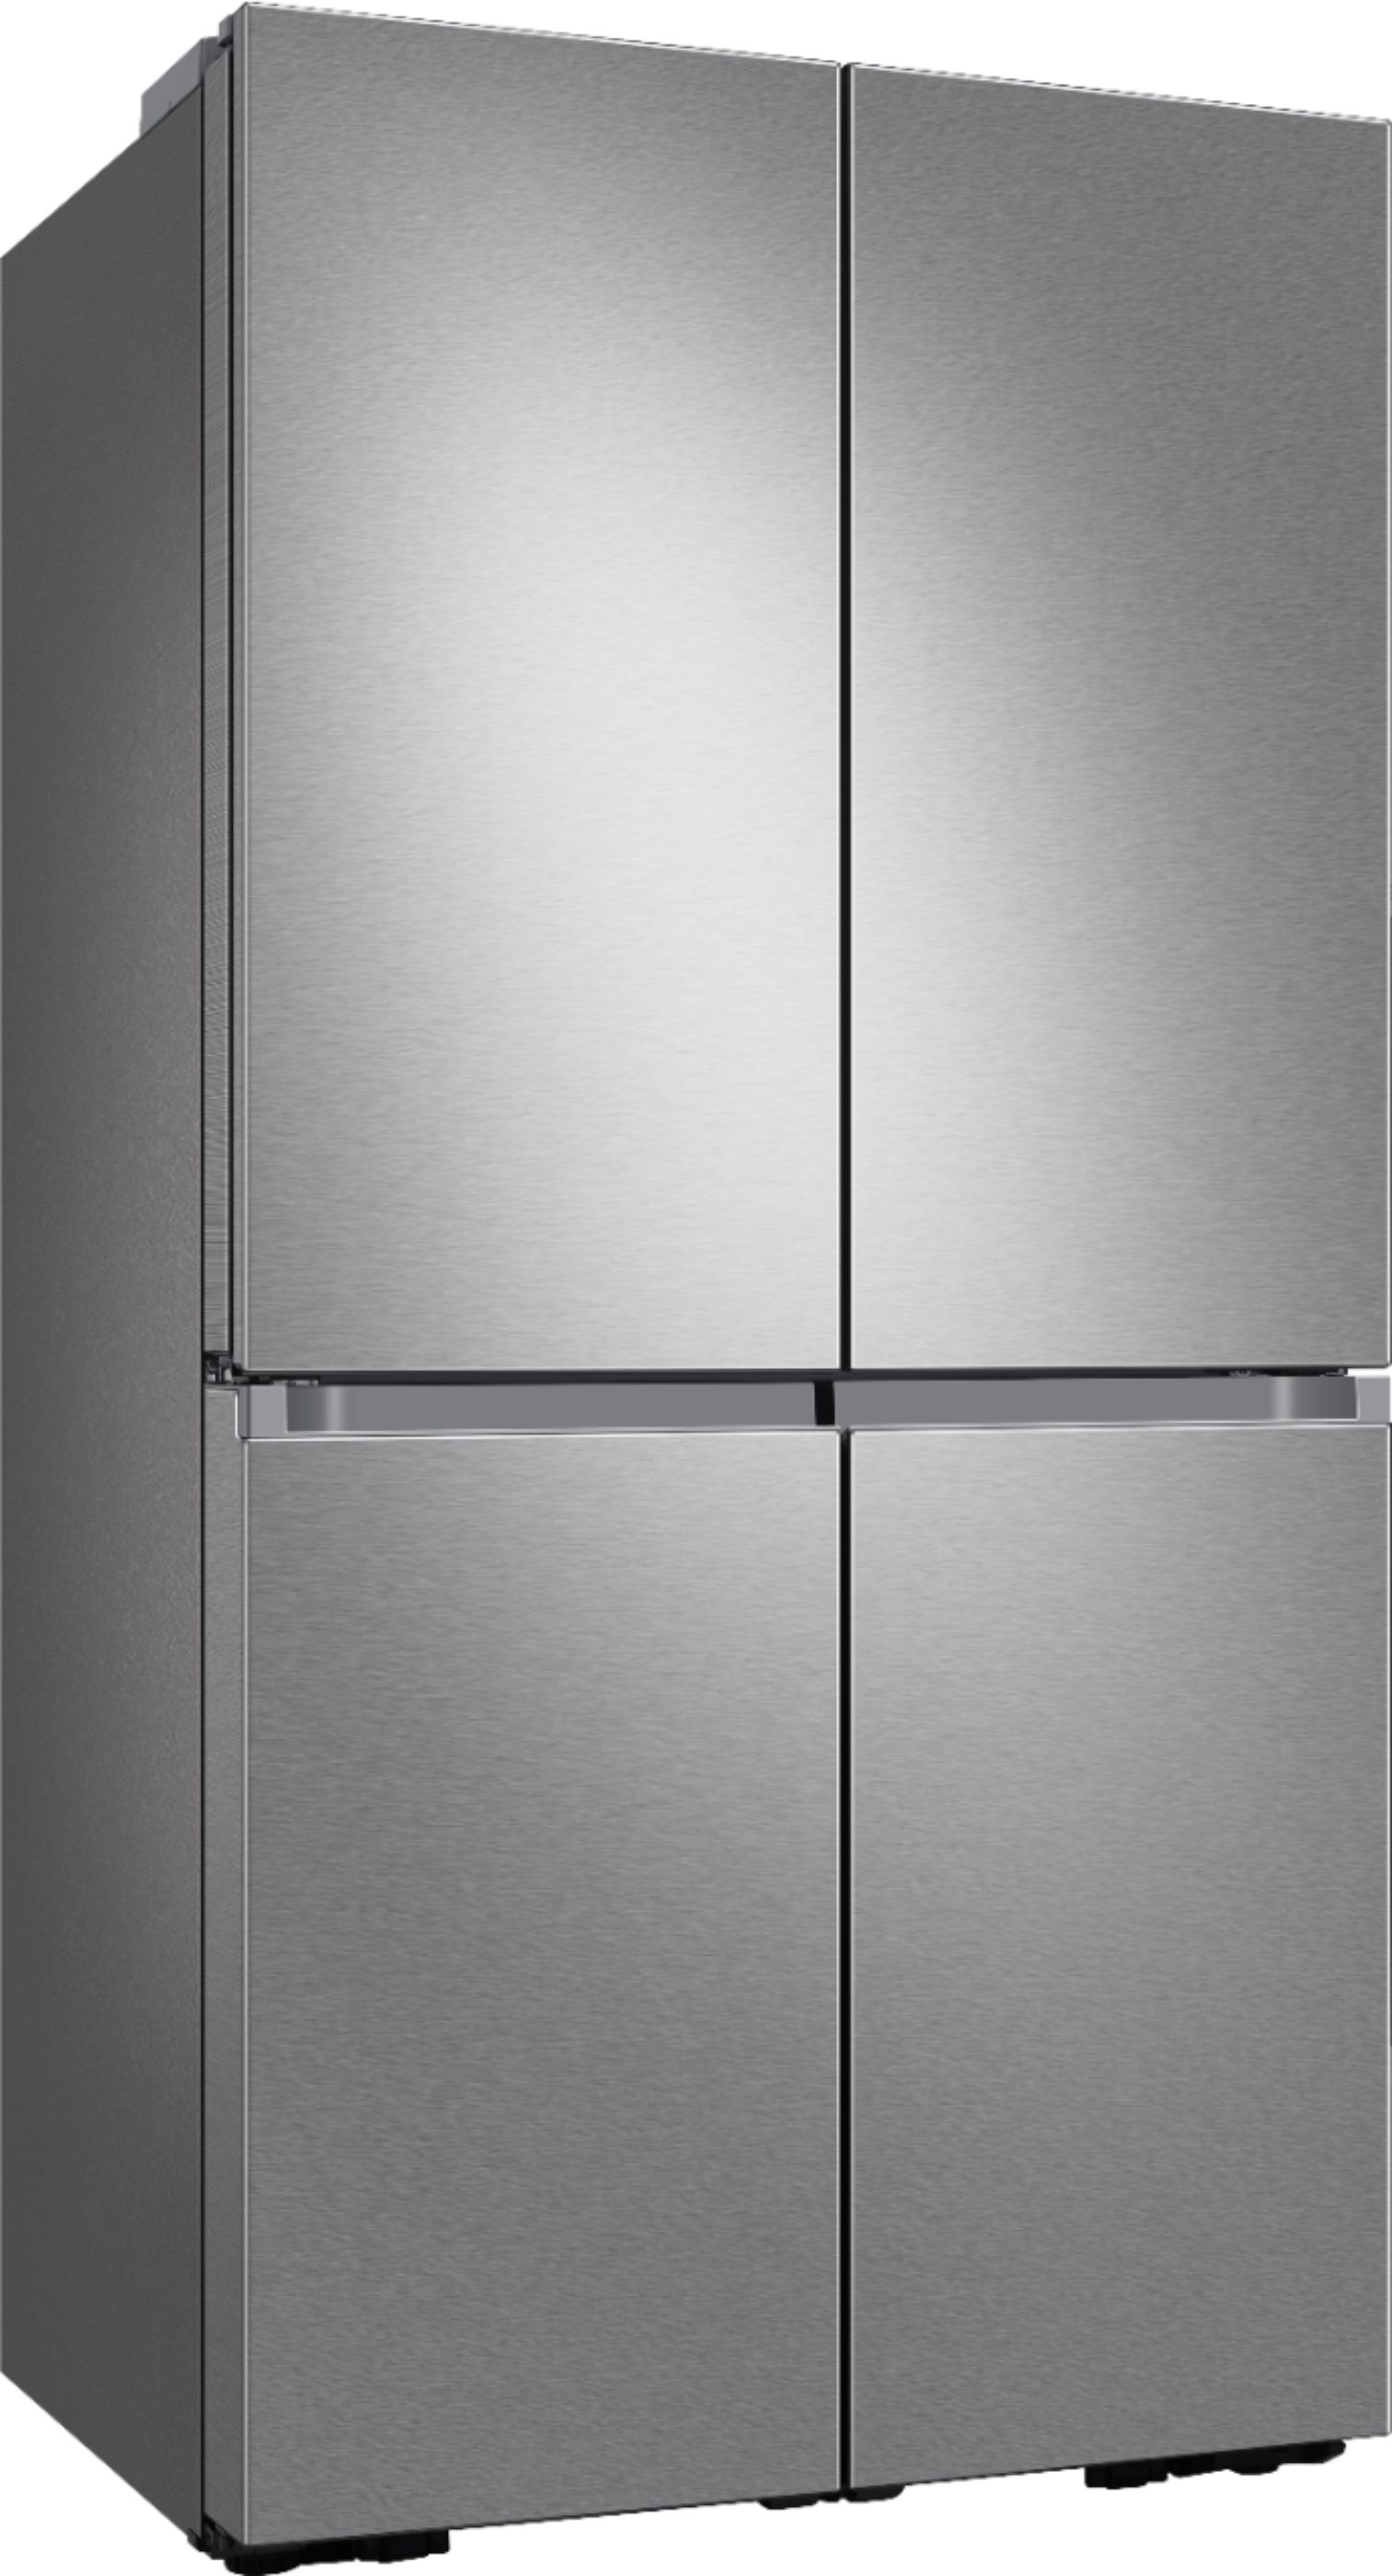 Left View: Samsung - Bespoke 24 cu. ft. Counter Depth 3-Door French Door Refrigerator with AutoFill Water Pitcher - Custom Panel Ready